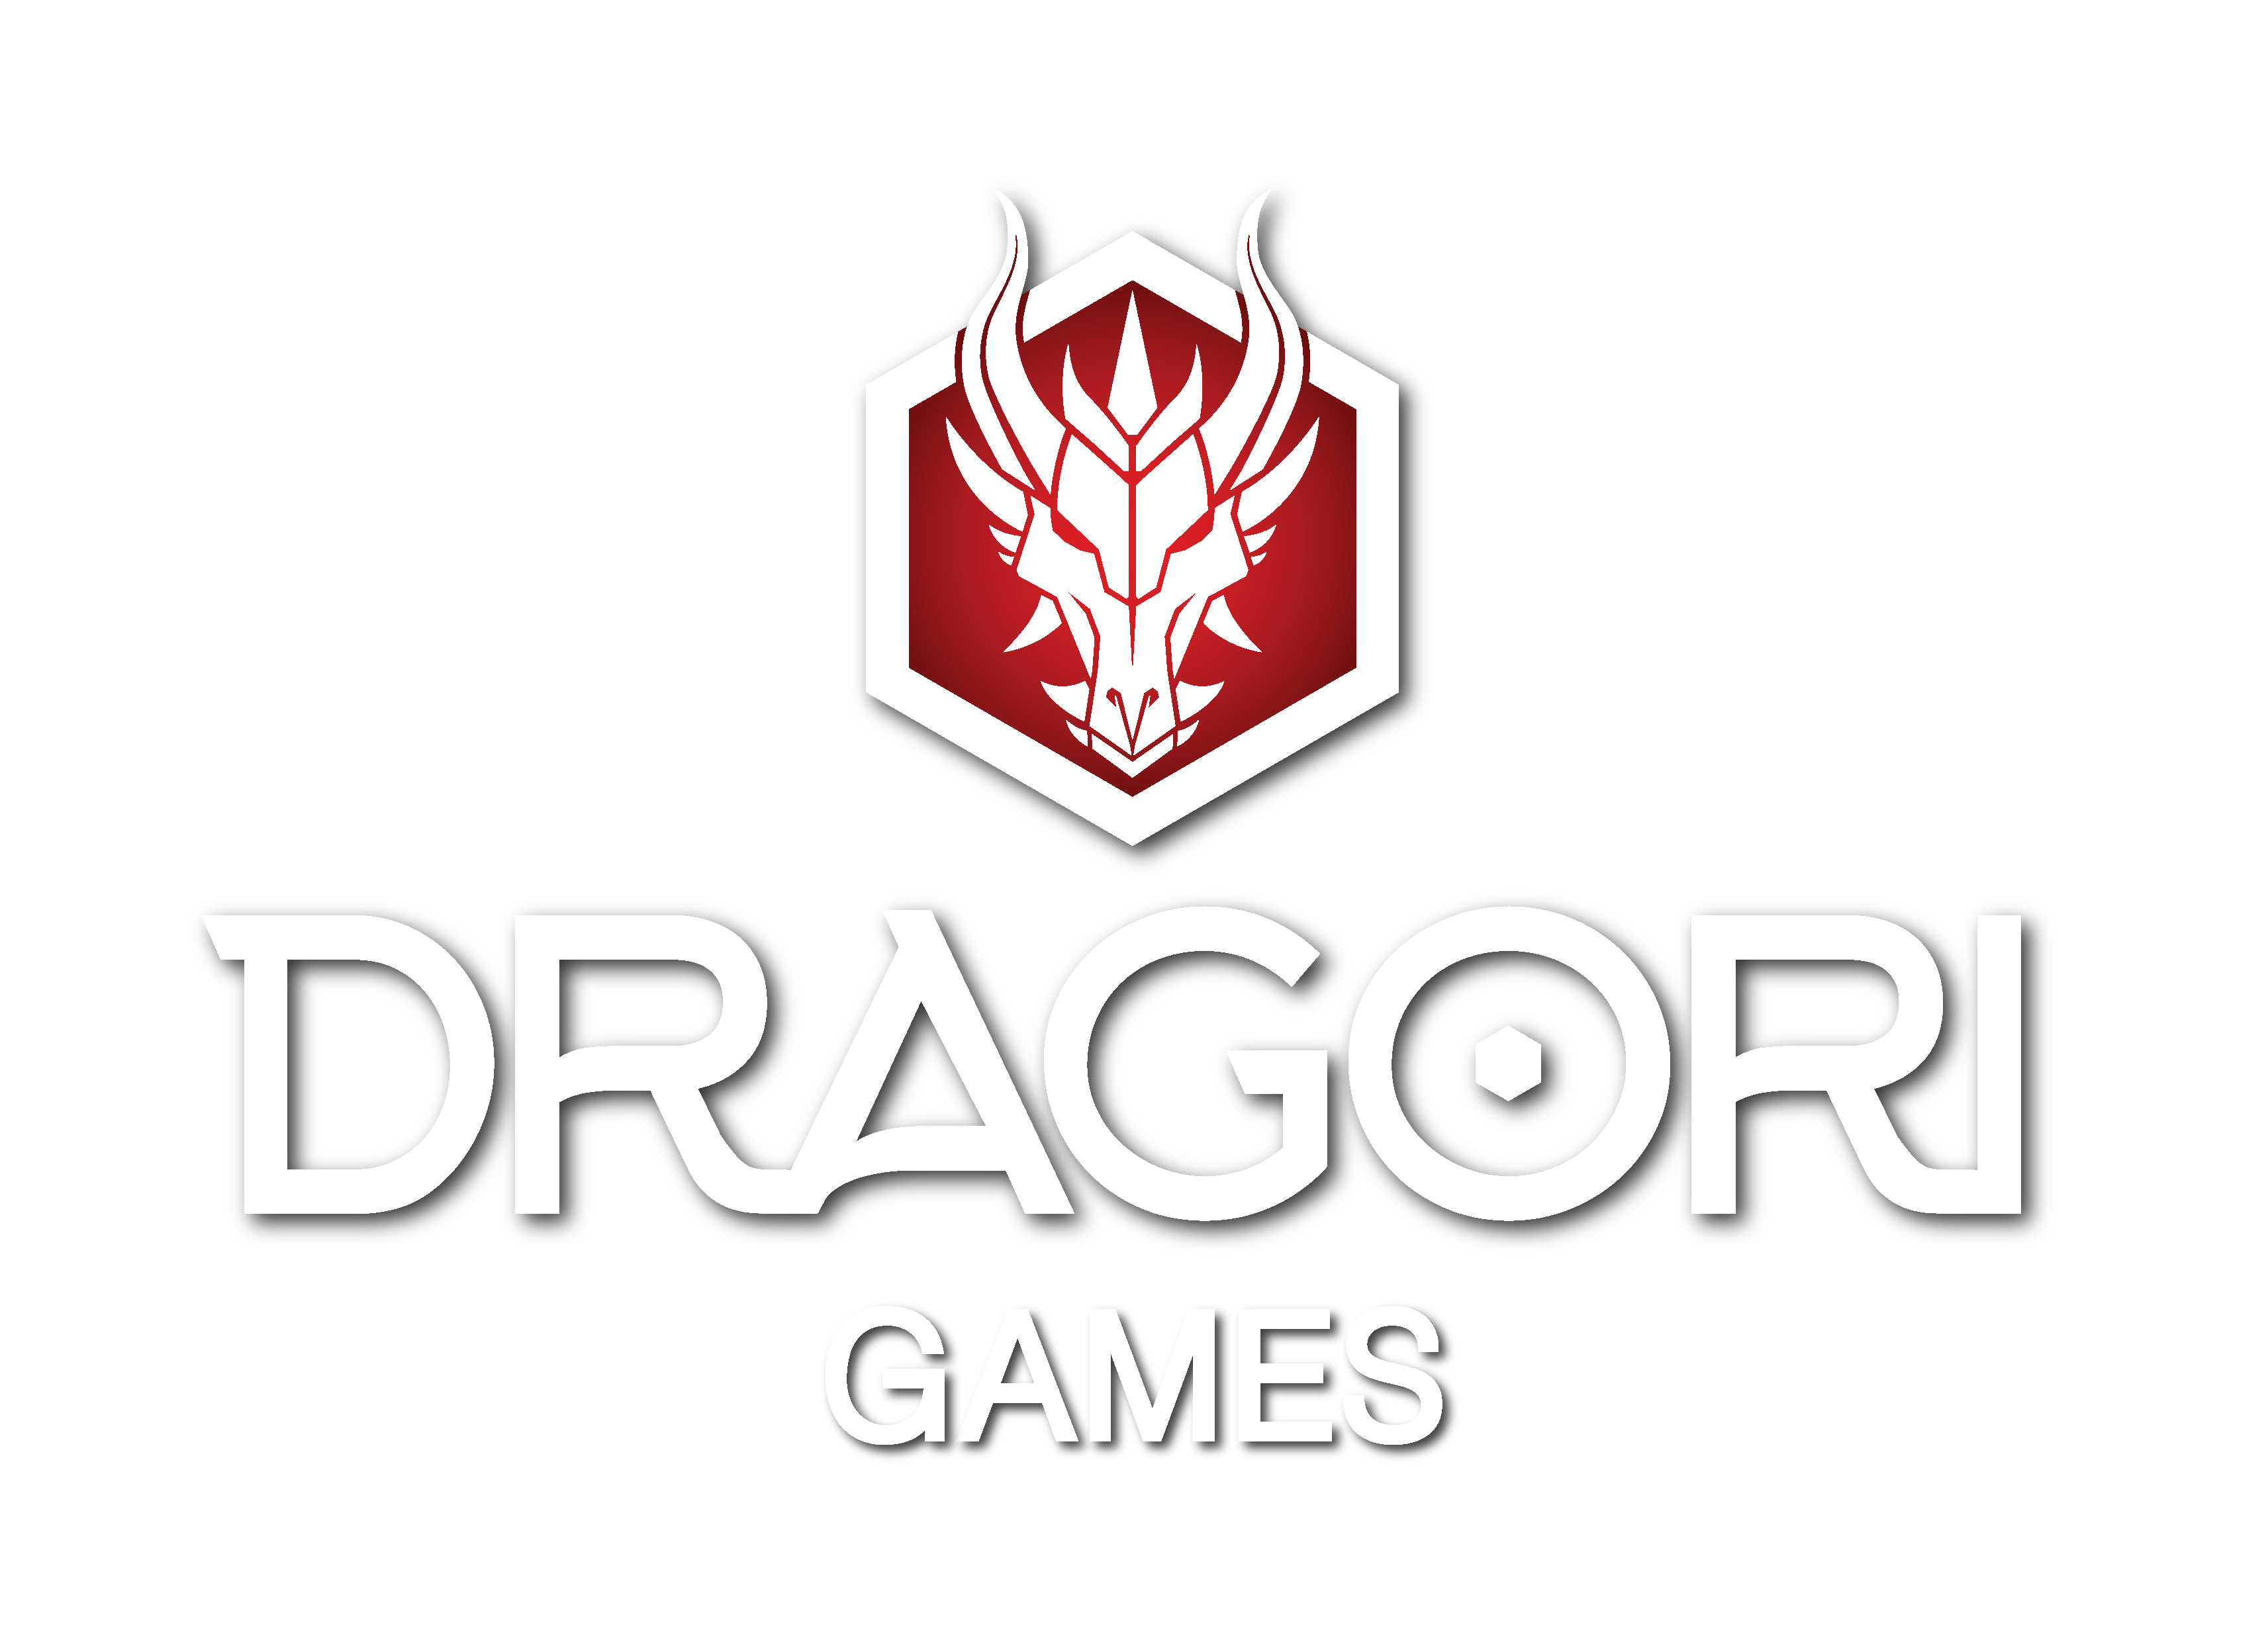 Dragori Games